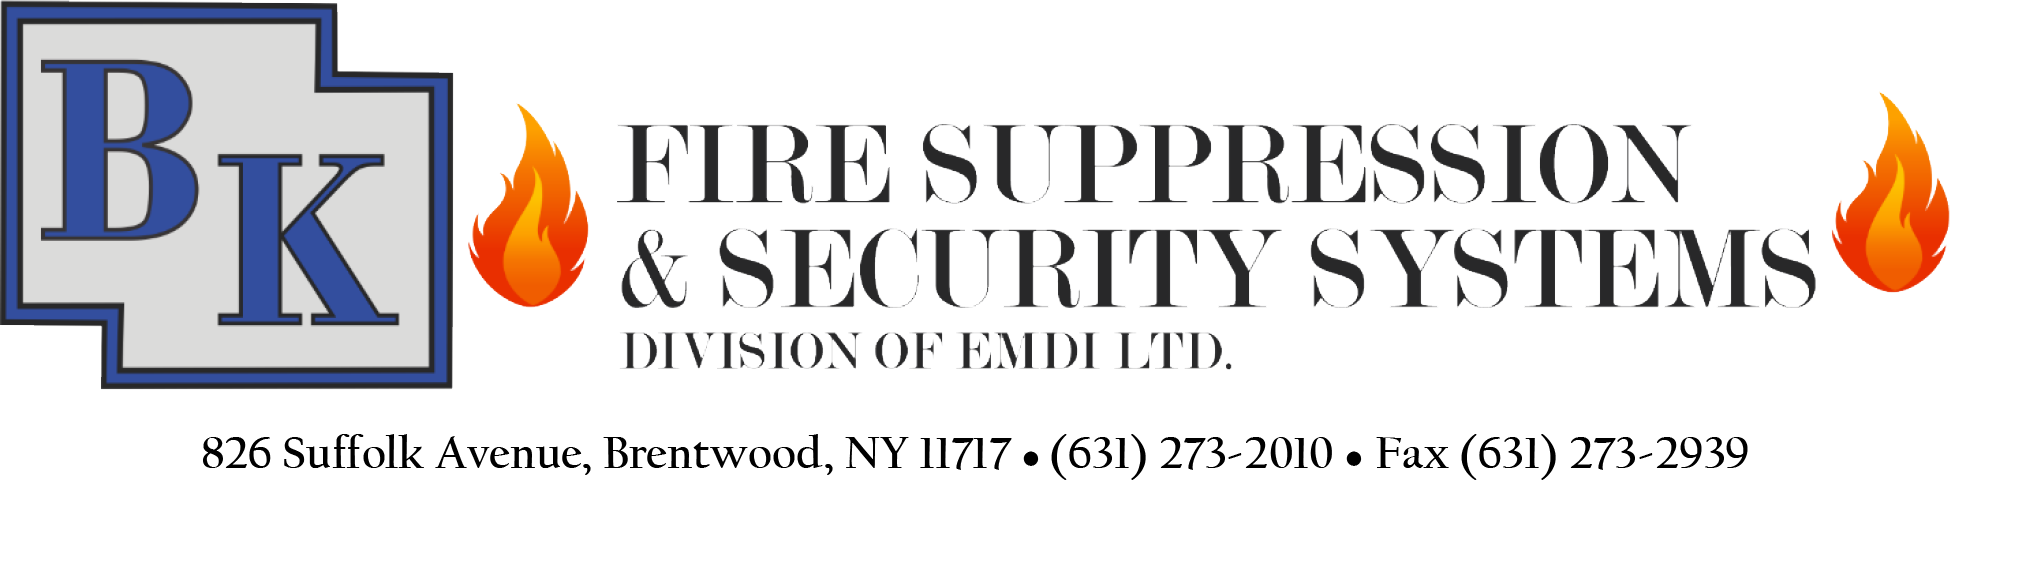 BK Fire Suppression Logo